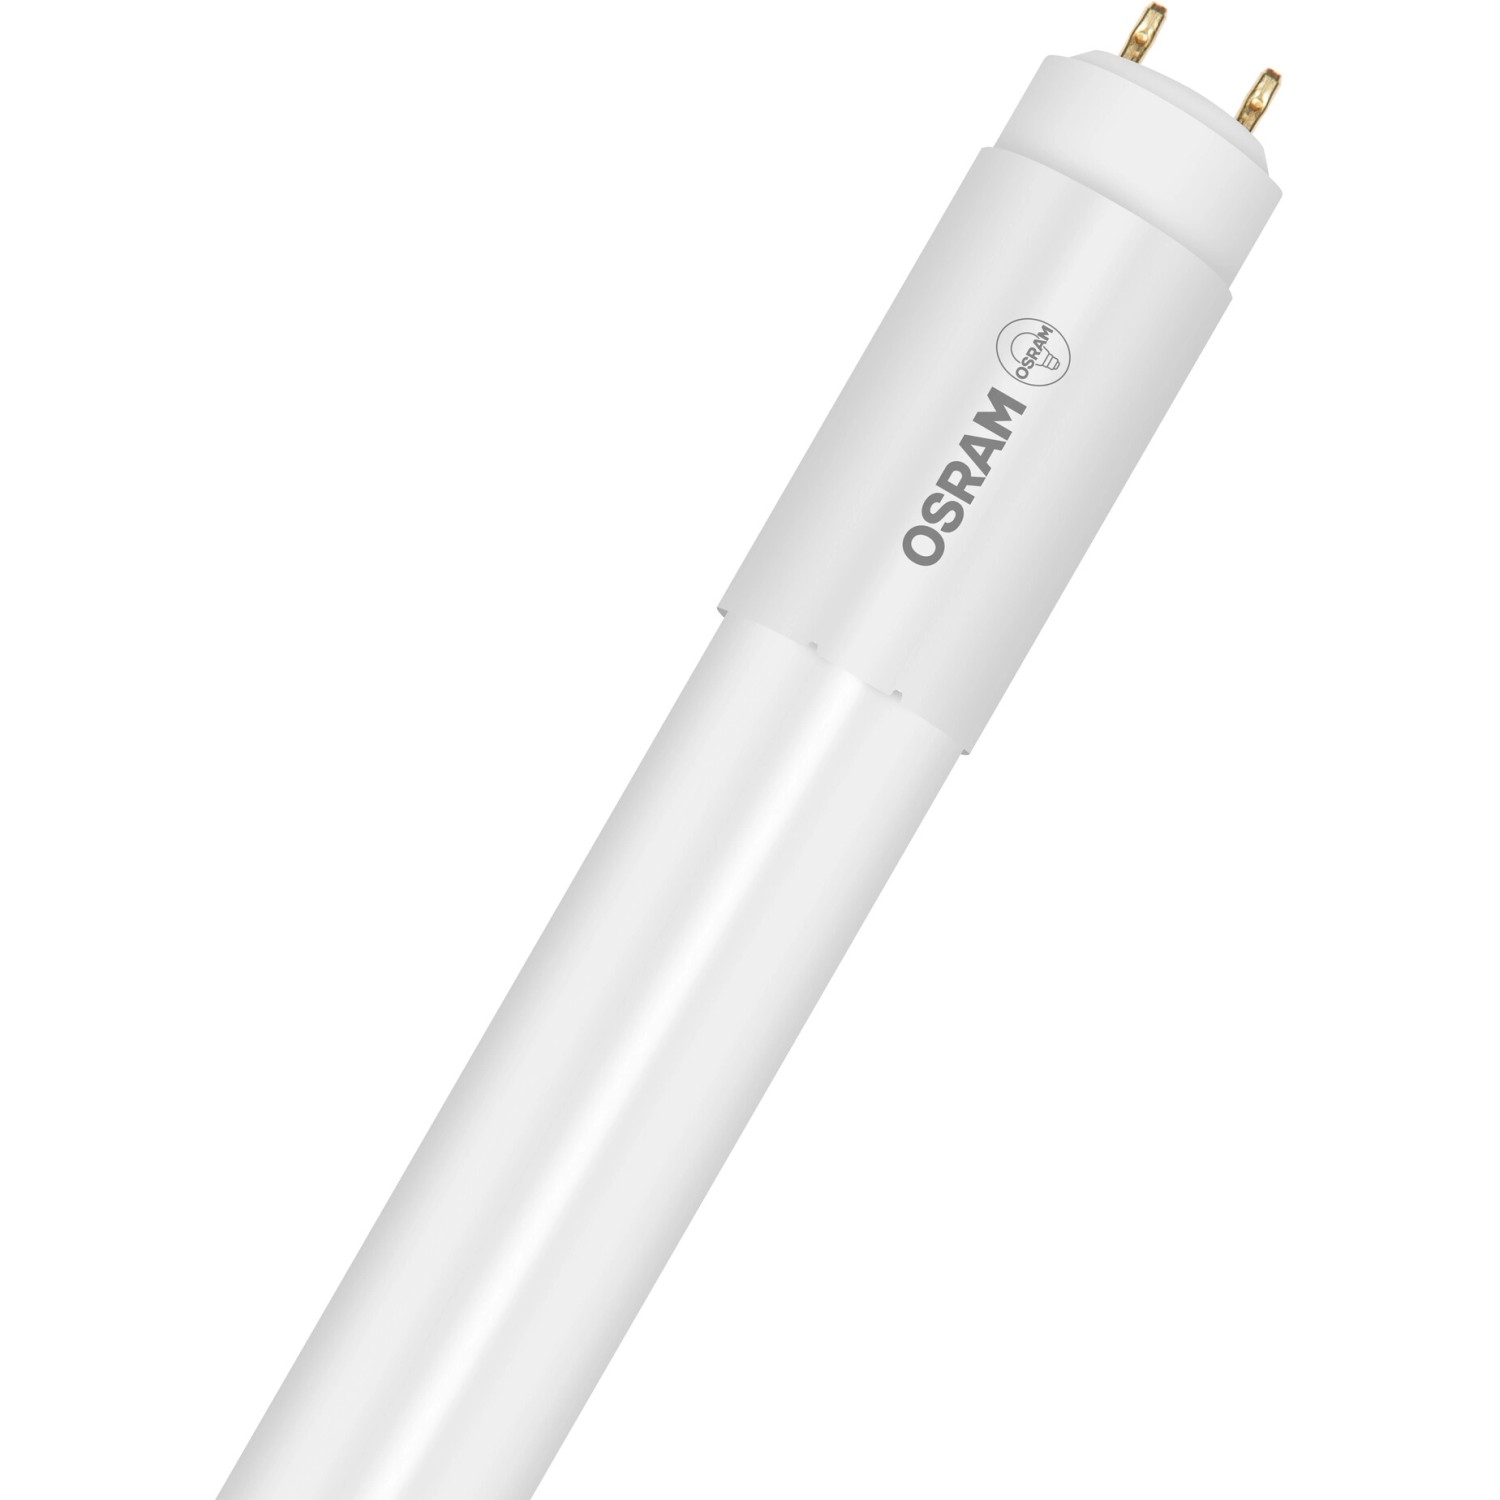 Osram LED-Leuchtstofflampen G13 Röhre 24 W 2800 lm 151,3 cm x 2,8 cm Weiß